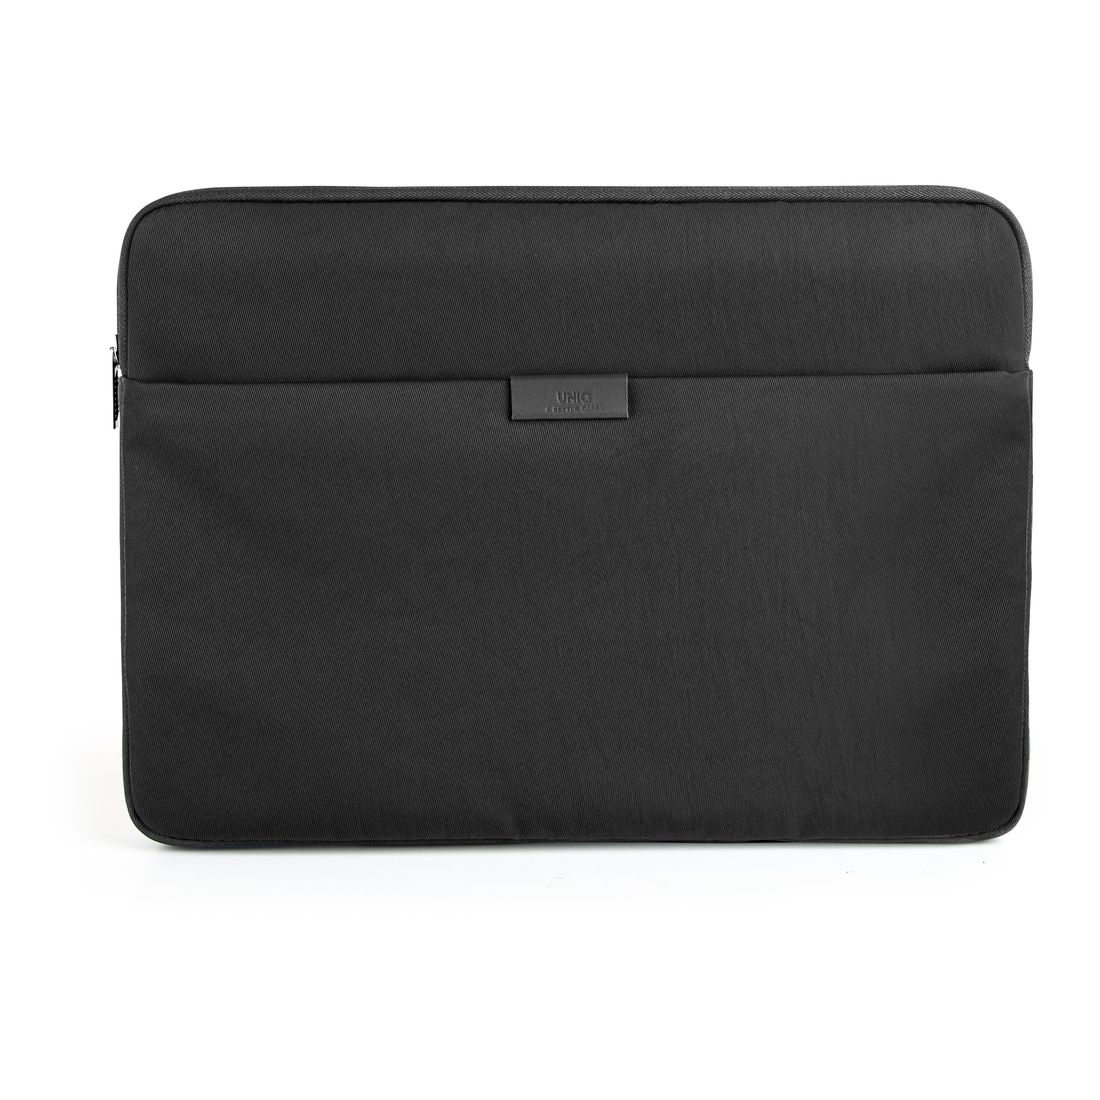 Uniq Bergen Protective Nylon Laptop Sleeve up to 14-Inch - Midnight Black